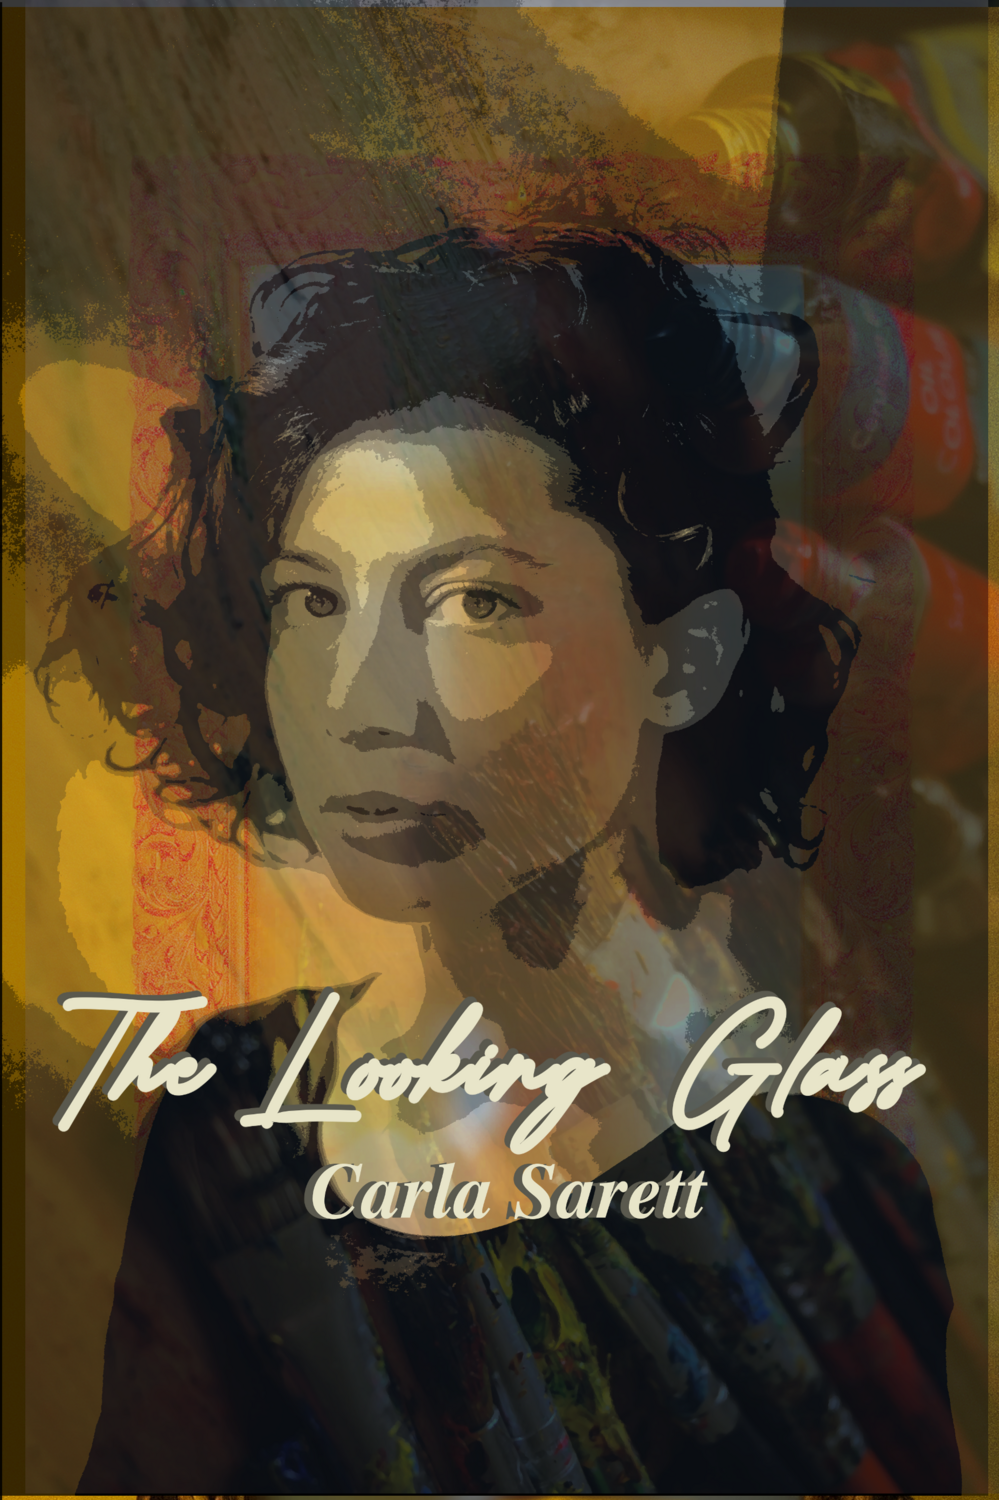 The Looking Glass, by Carla Sarett